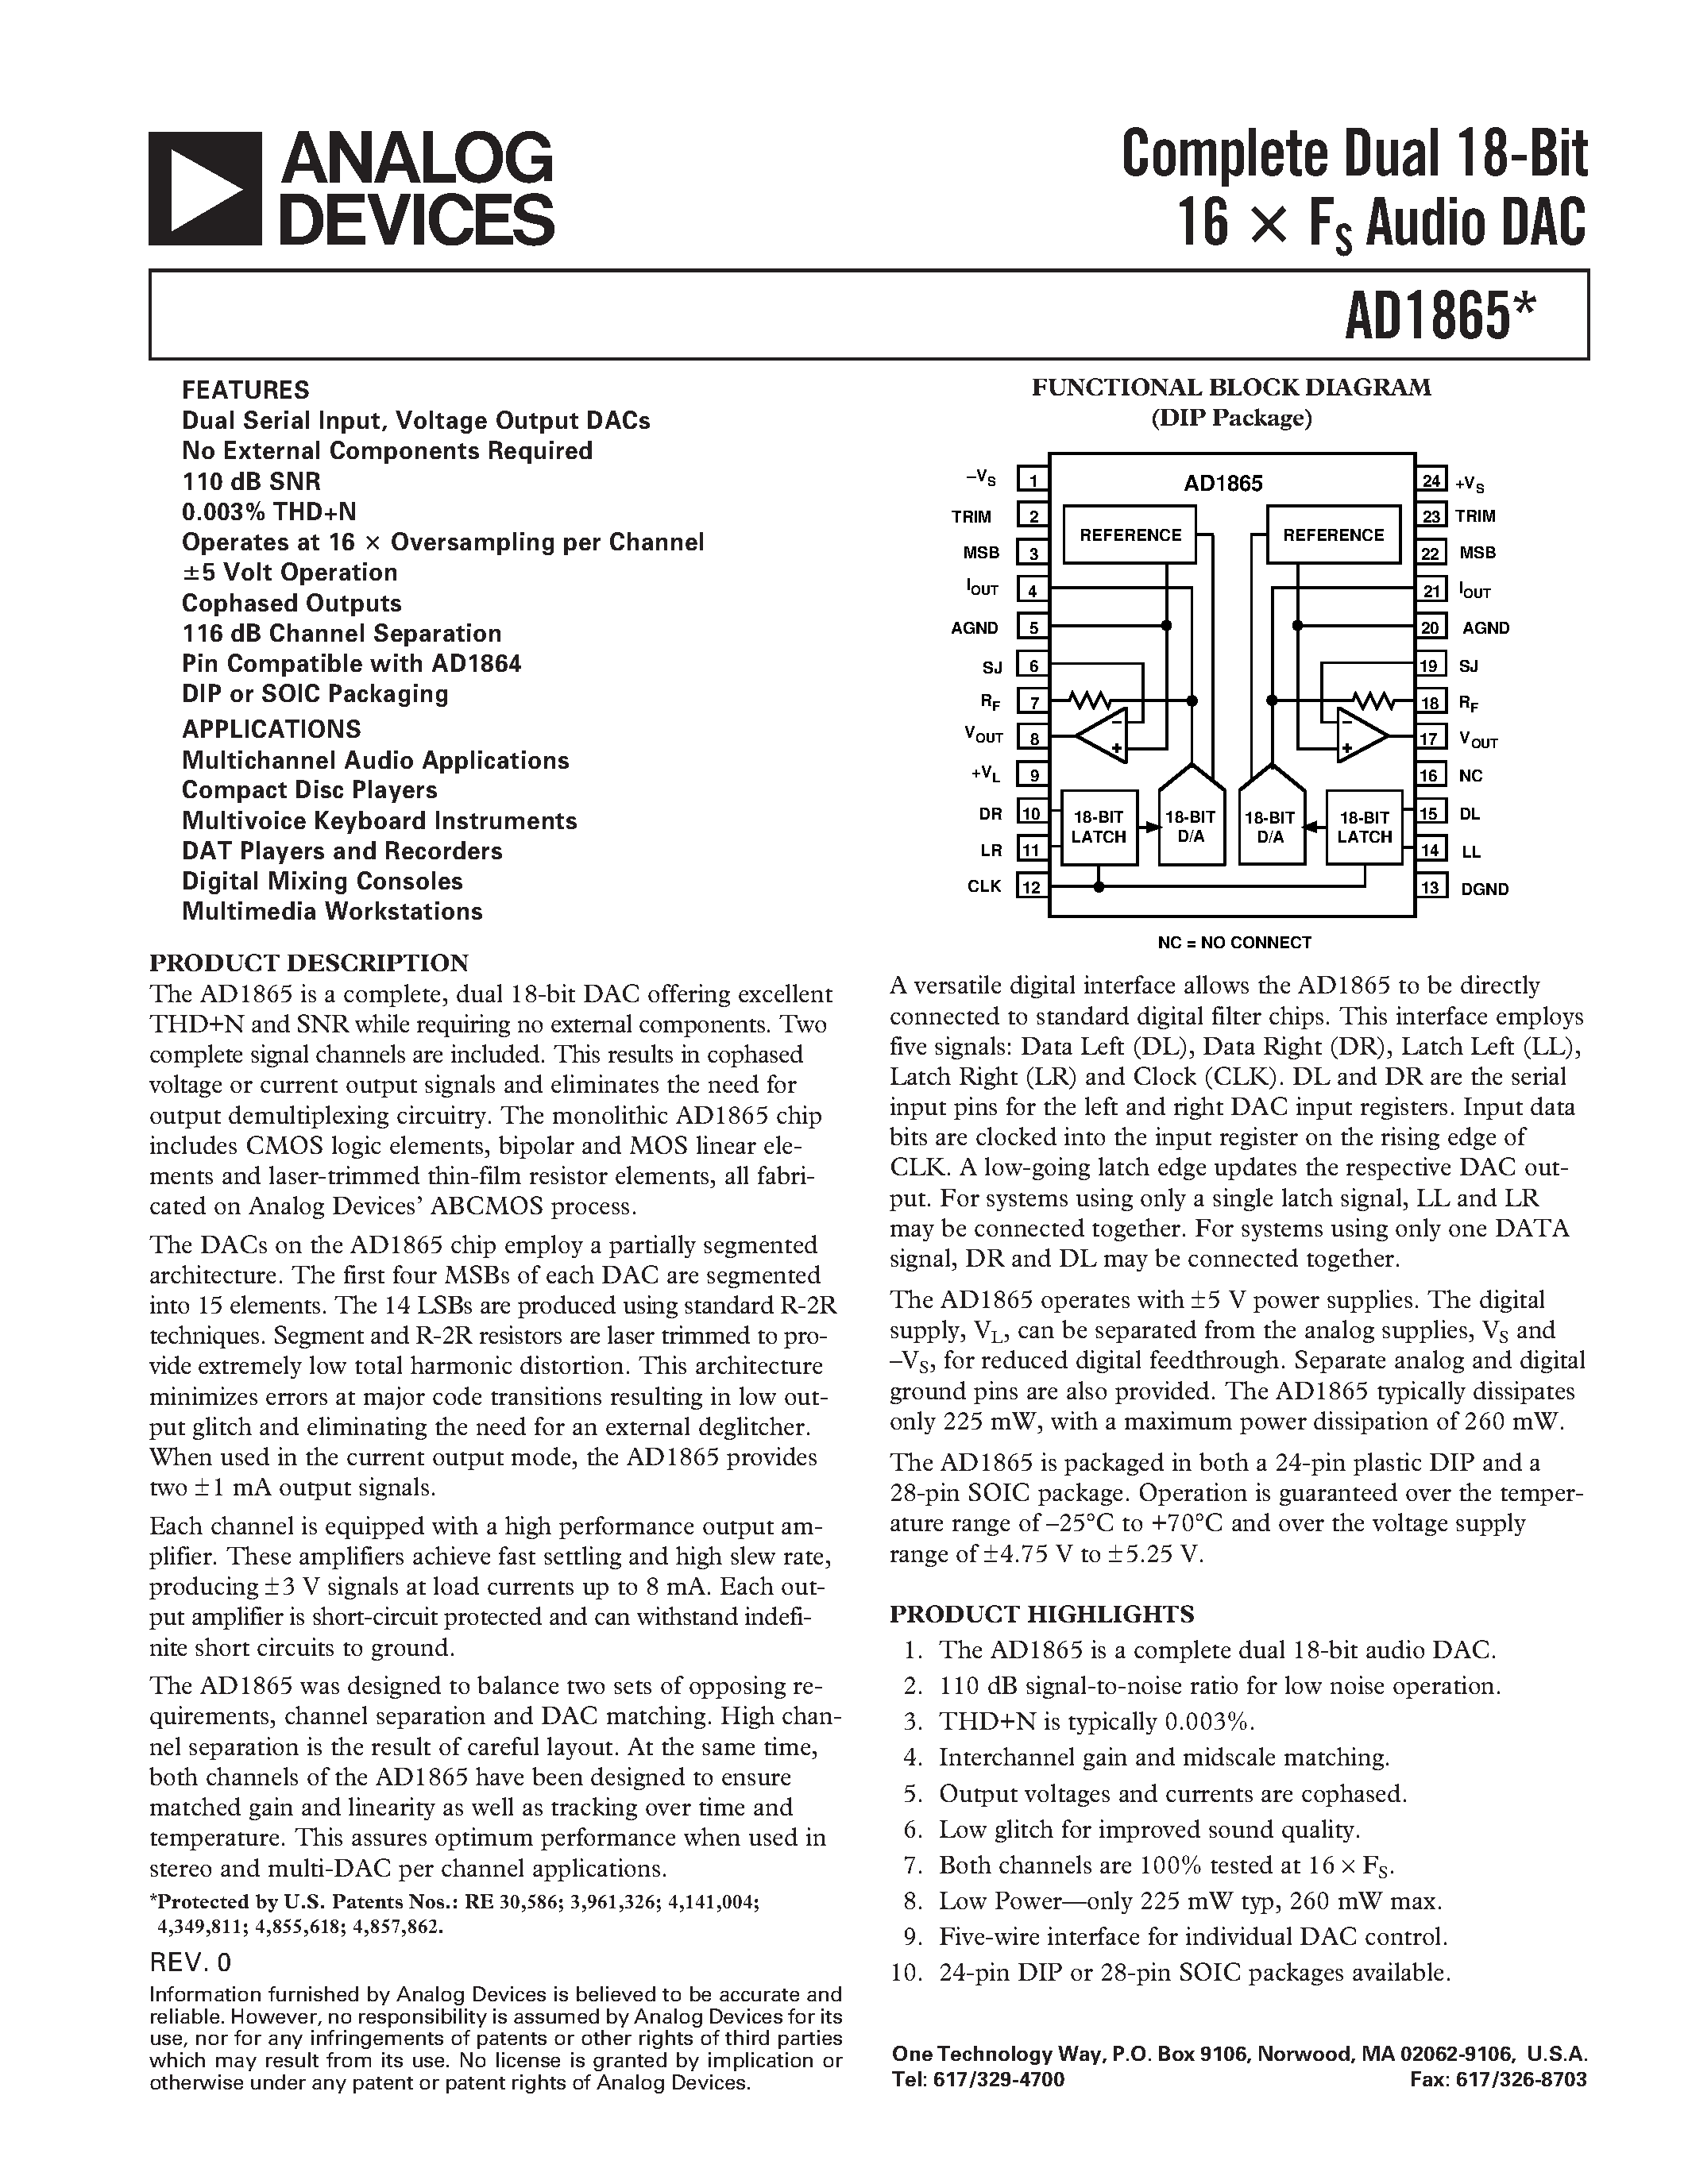 Datasheet AD1865R-J - Complete Dual 18-Bit 16 x Fs Audio DAC page 1